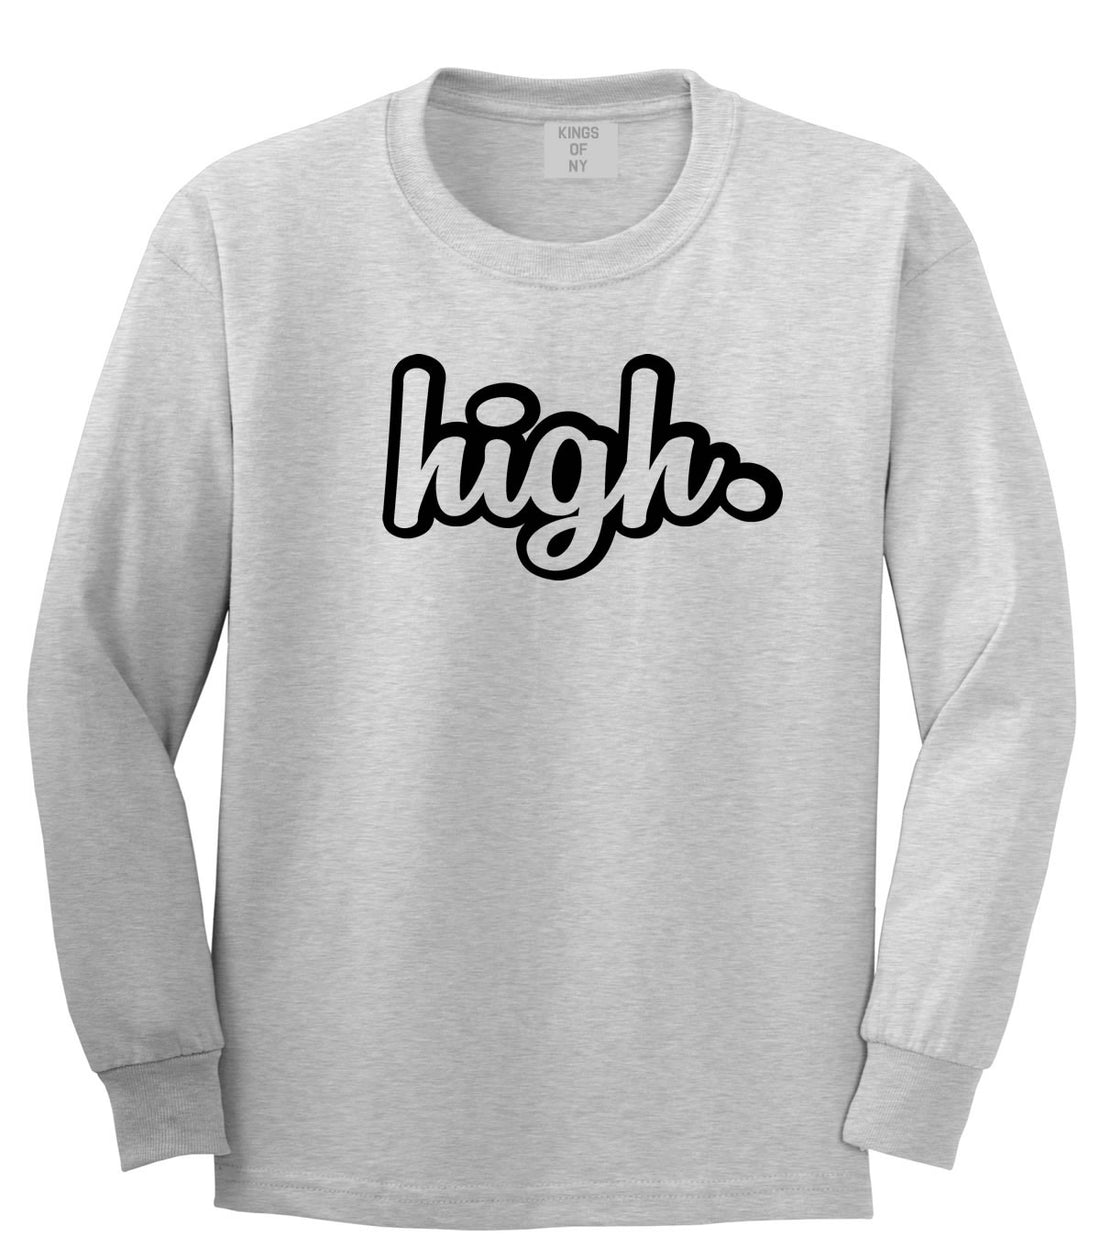 High Weed Faded Dap Smoke Marijuana Long Sleeve T-Shirt In Grey by Kings Of NY